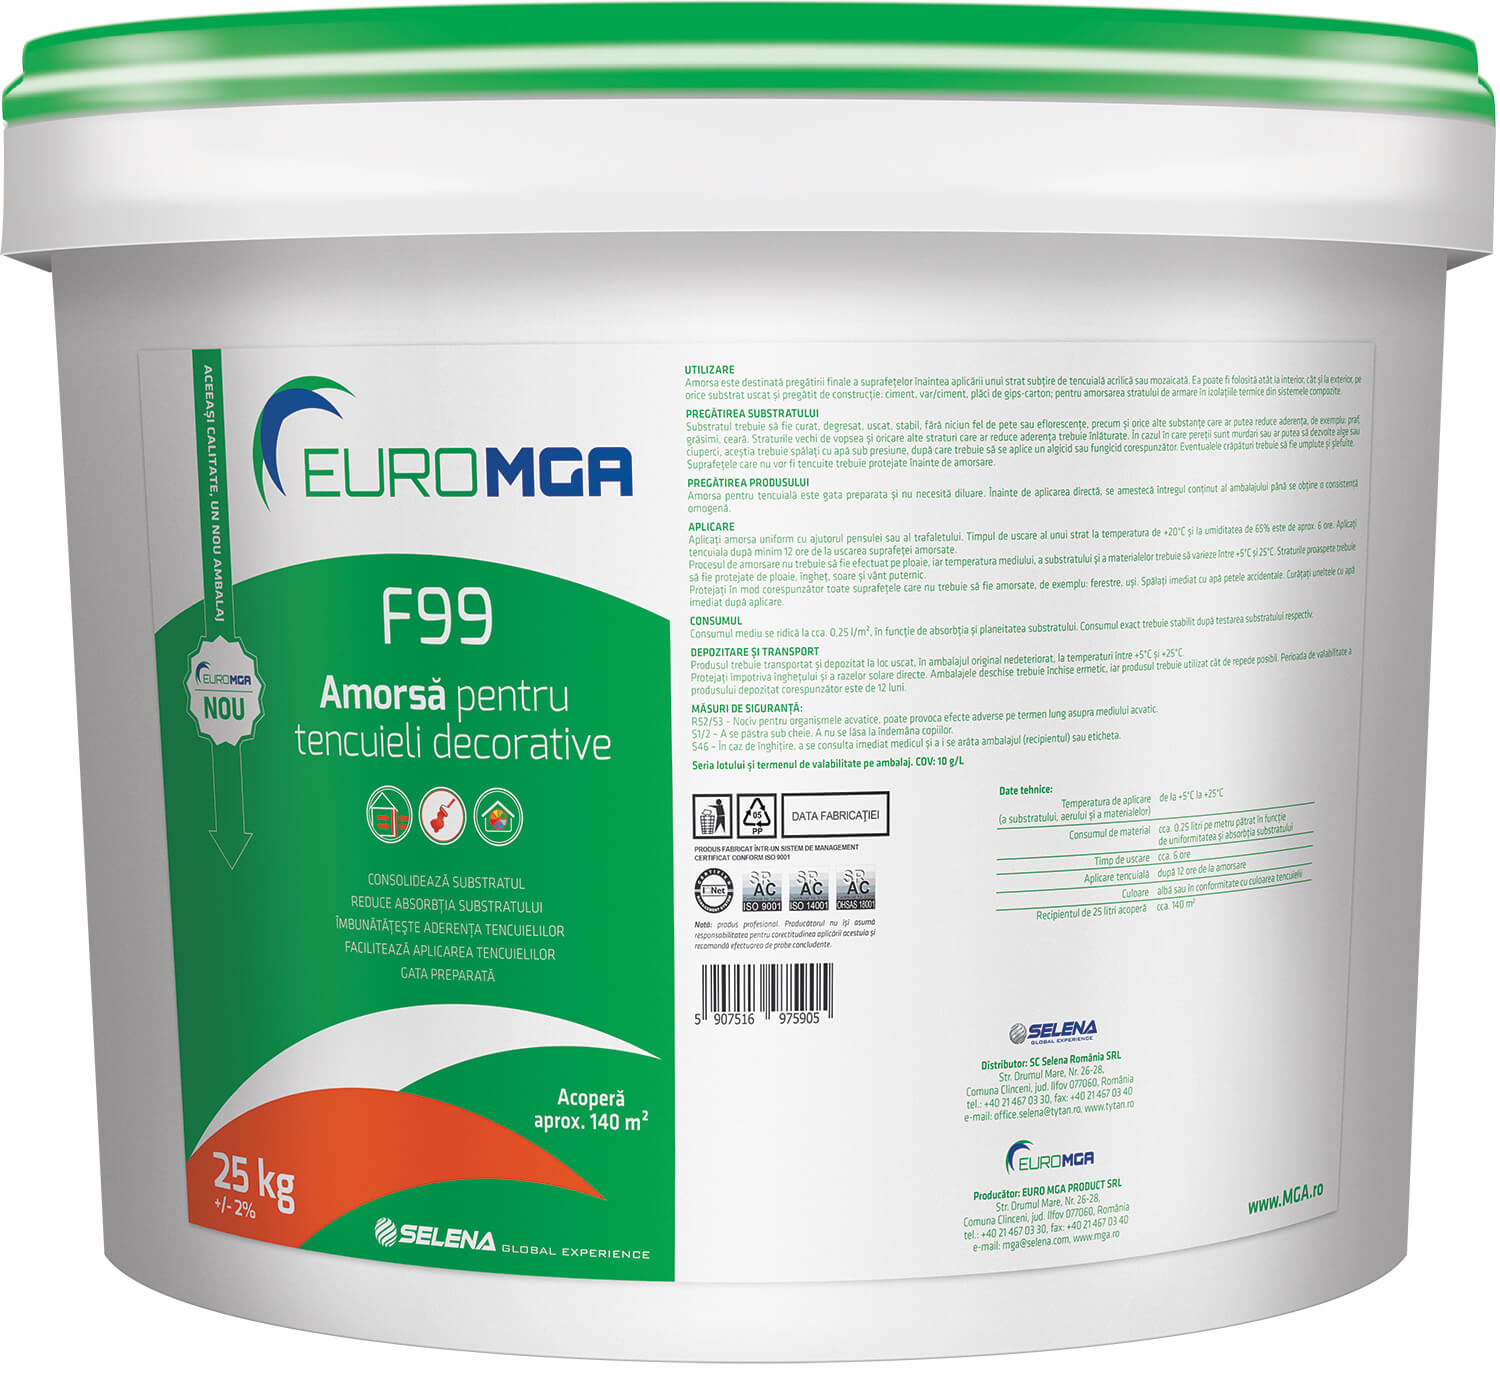 Primers for plastering - Primer for decorative plasters capucino F99 EuroMGA 25kg, https:maxbau.ro